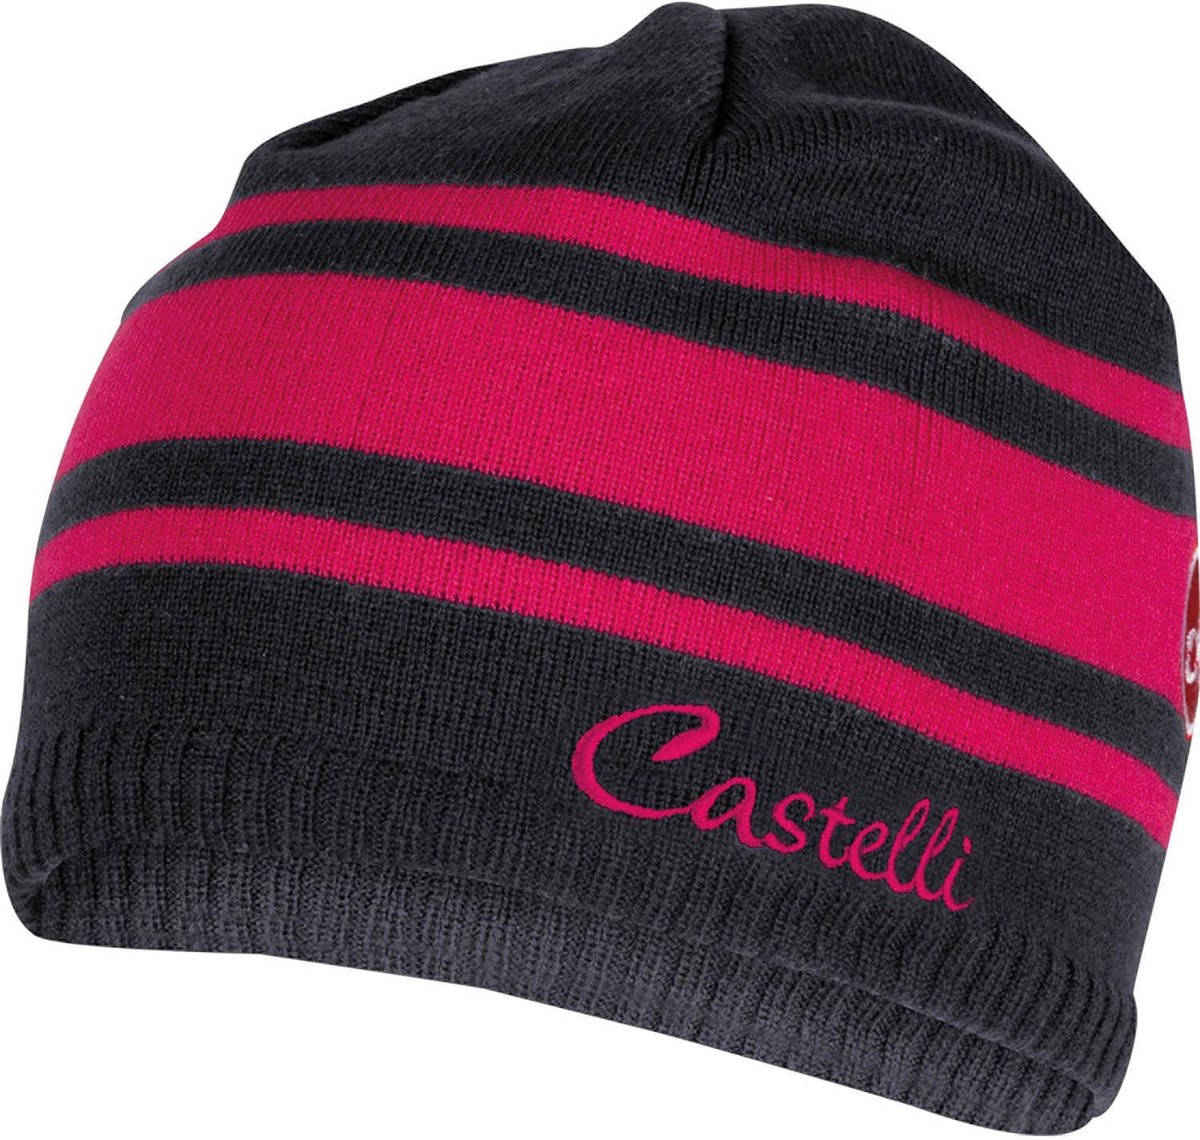 Castelli Knit Cap / Beanie